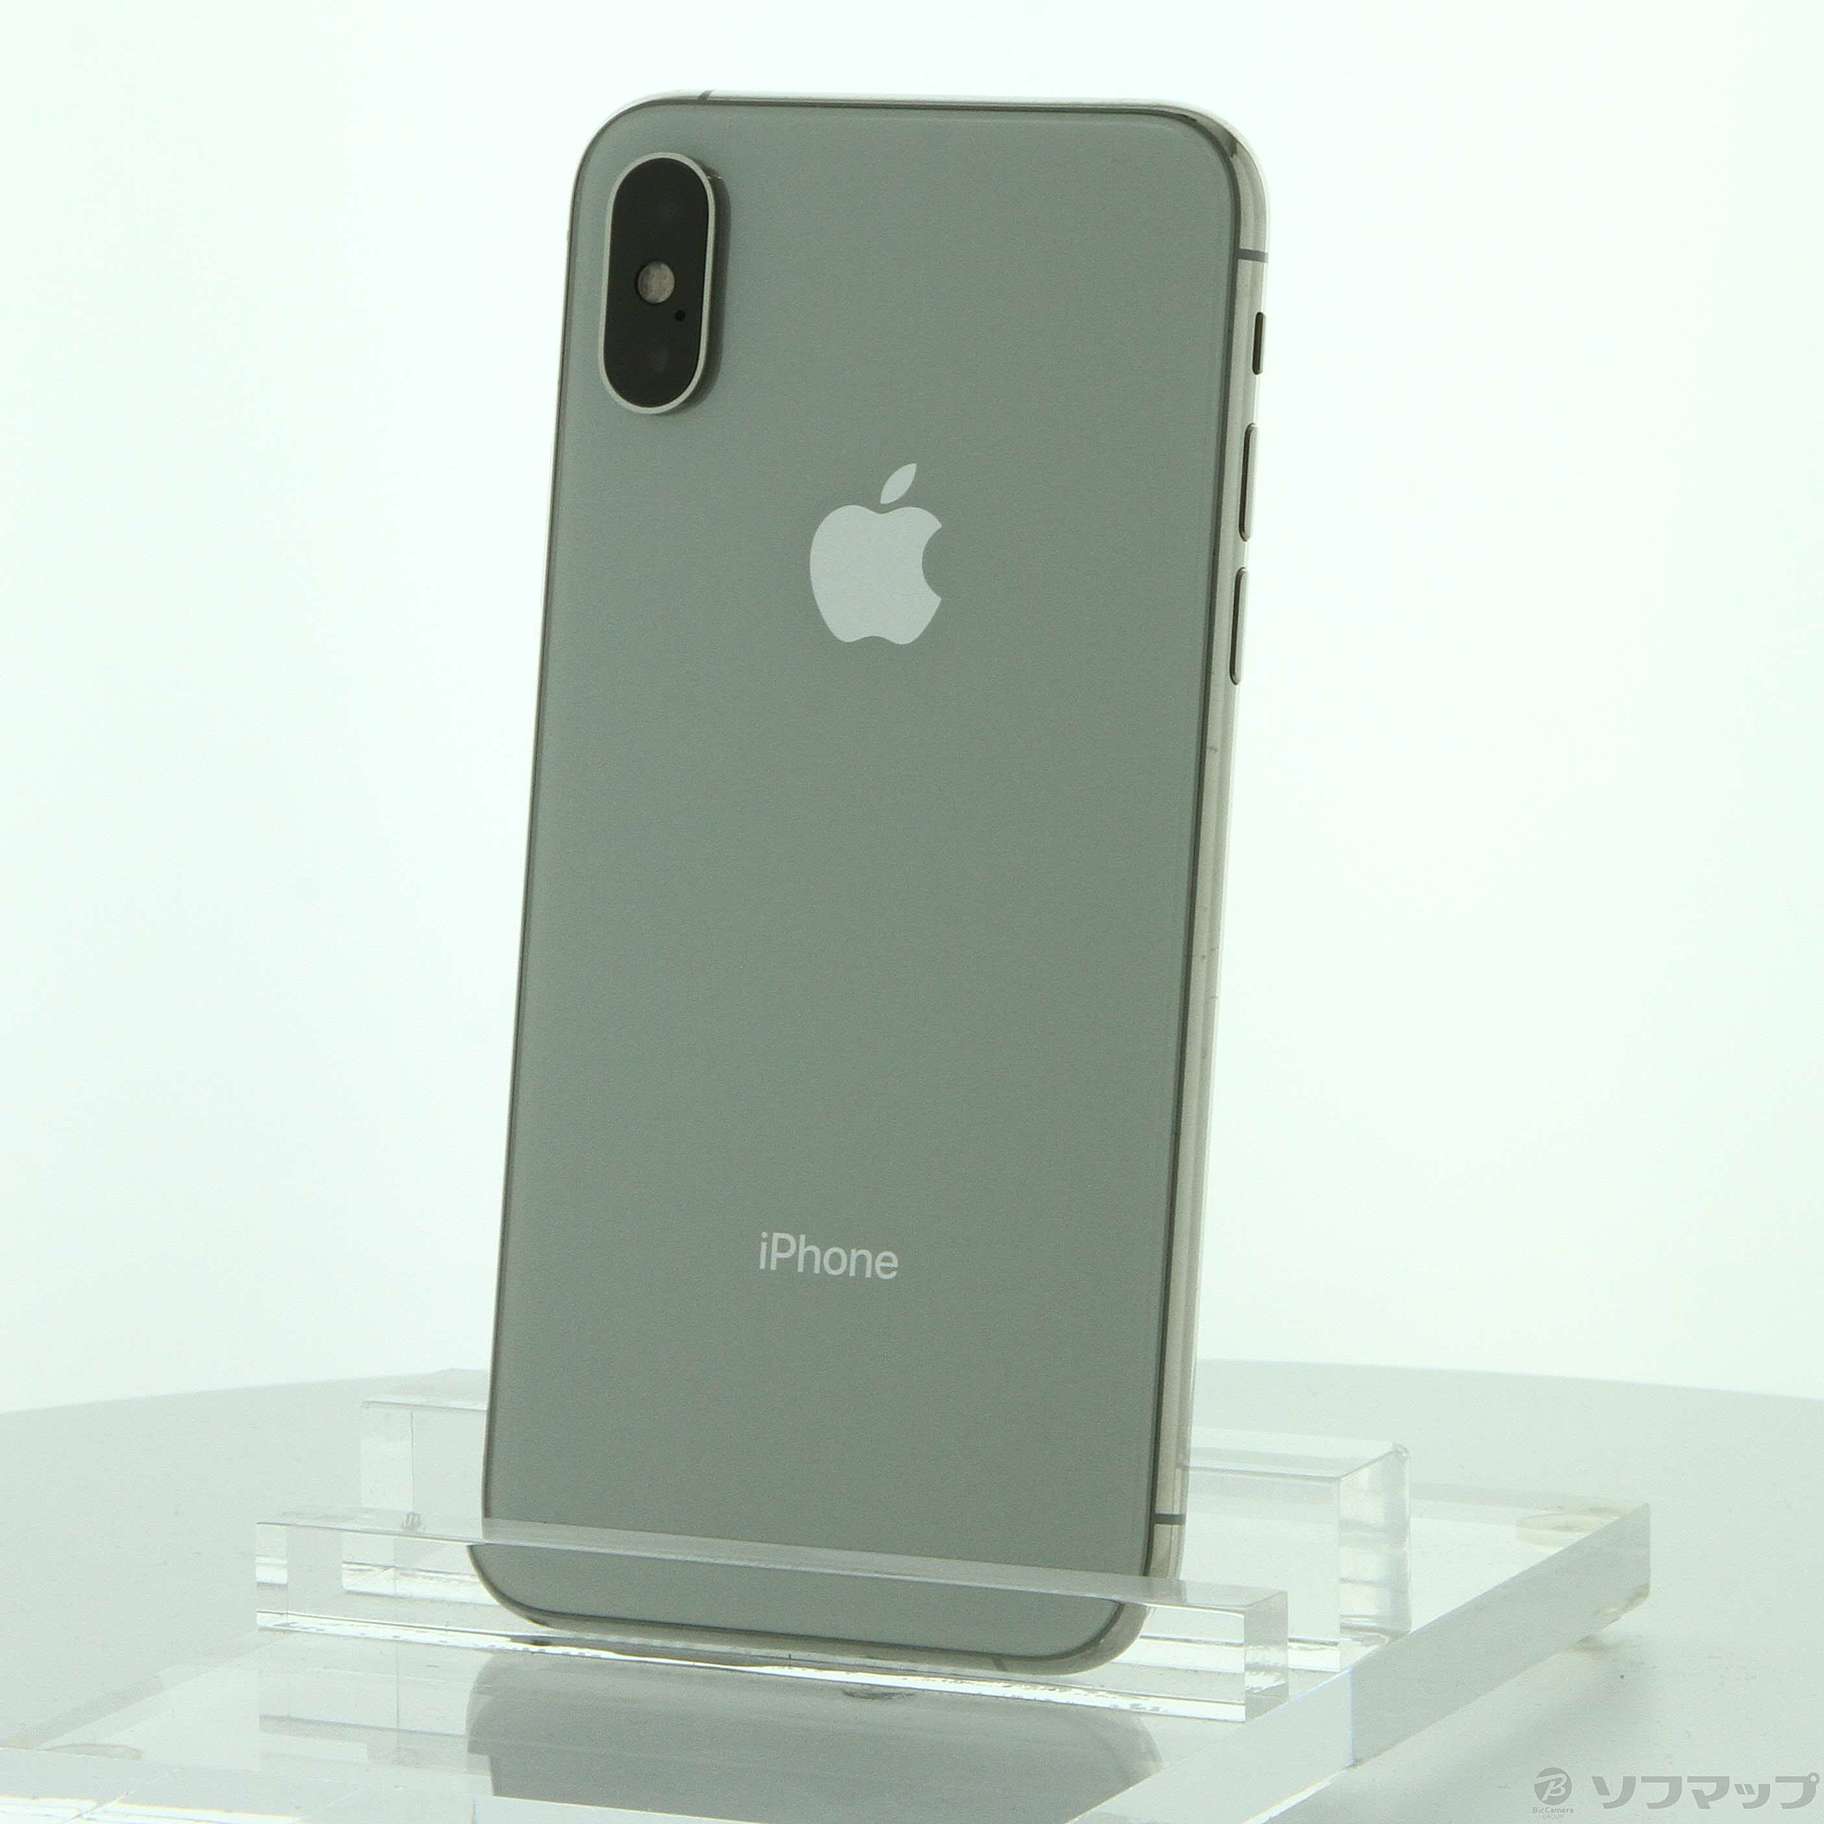 iPhoneXs 64GB 本体 - 携帯電話本体